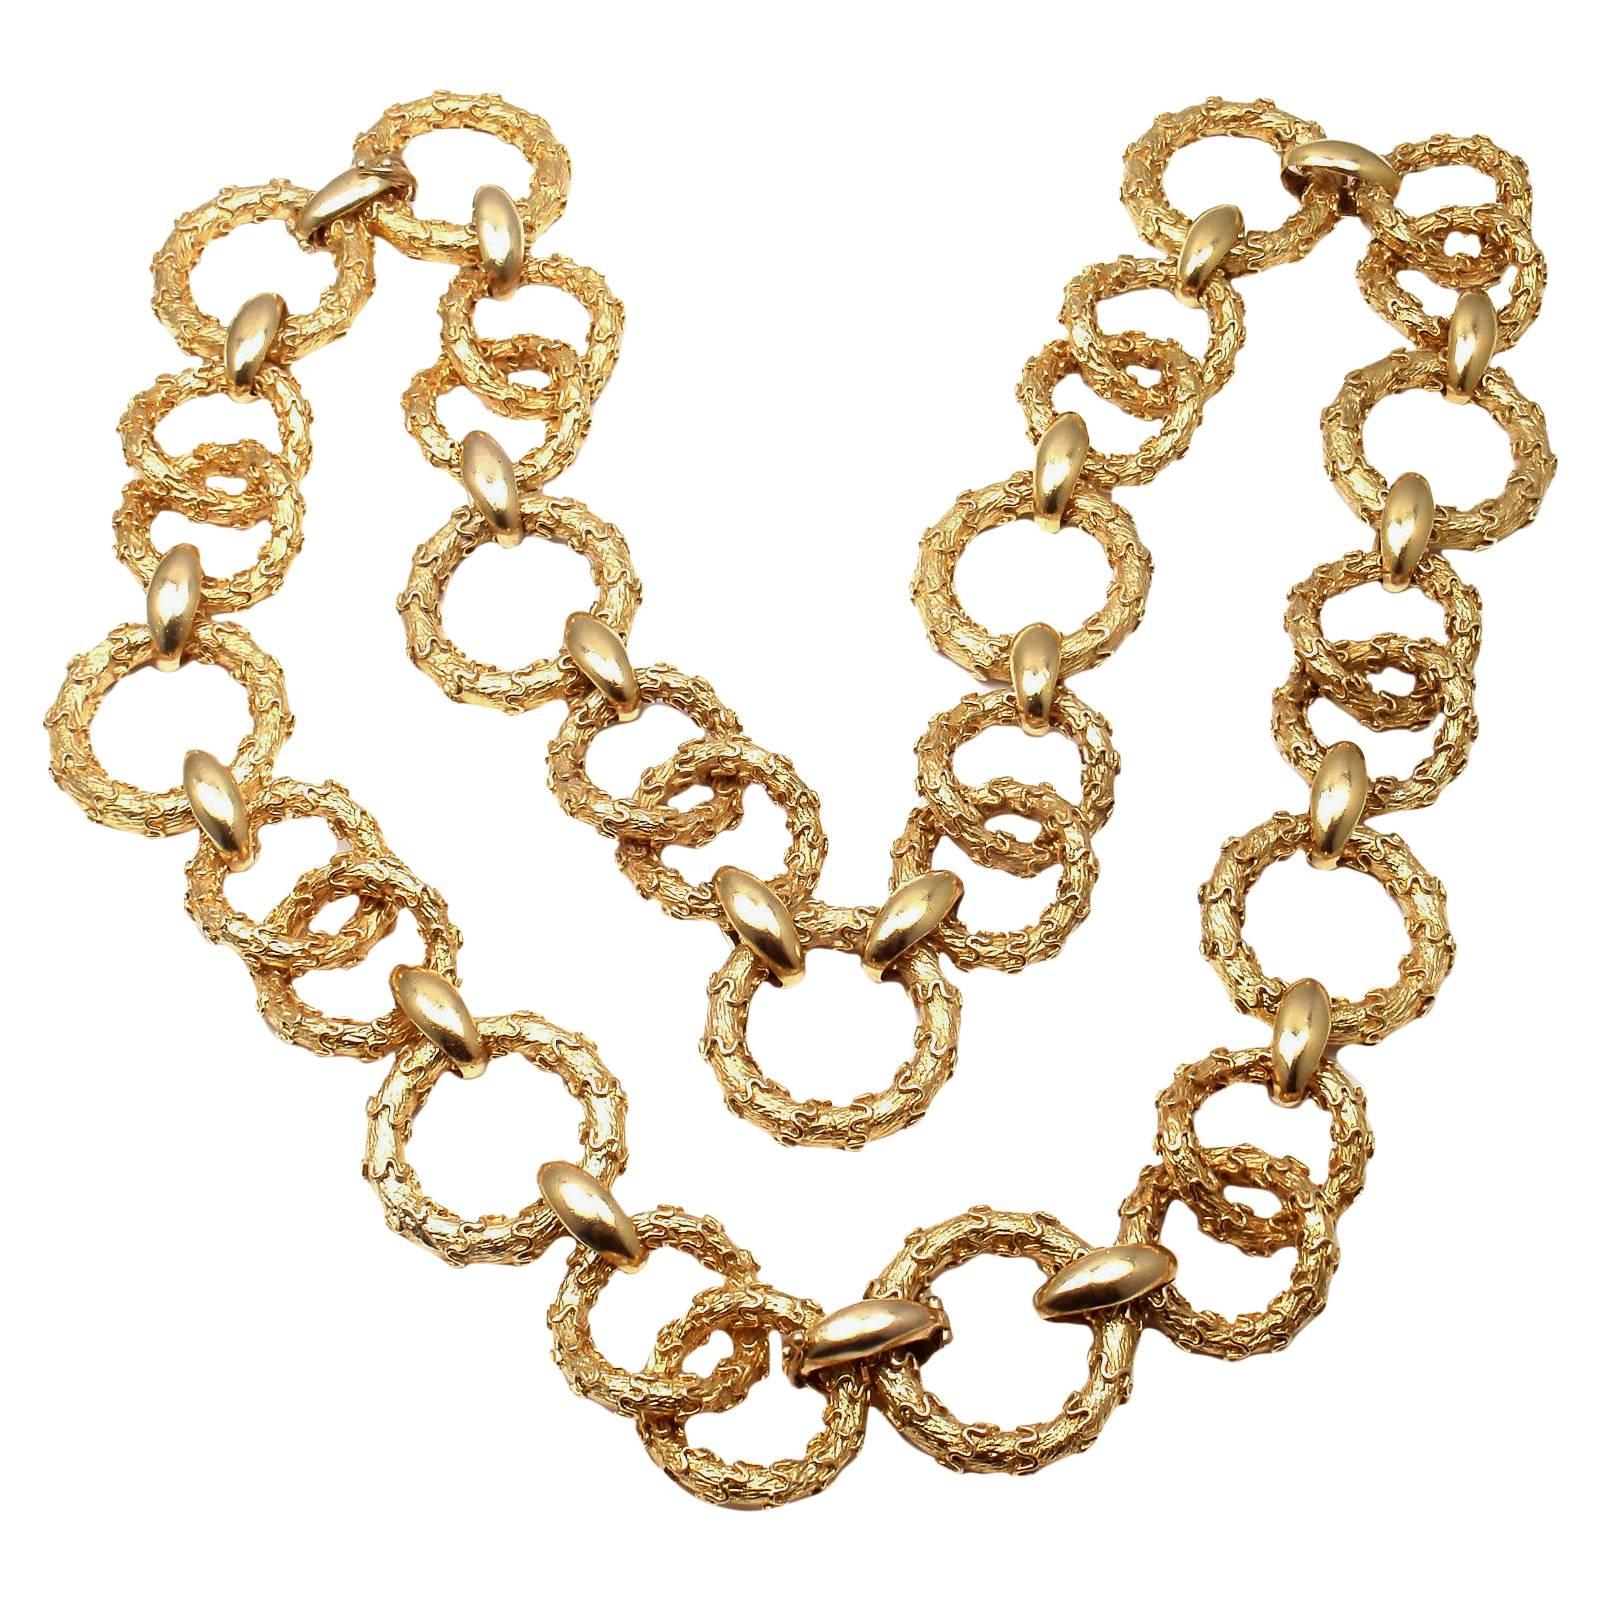 Hammerman Brothers Gold Link Bracelet And Necklace